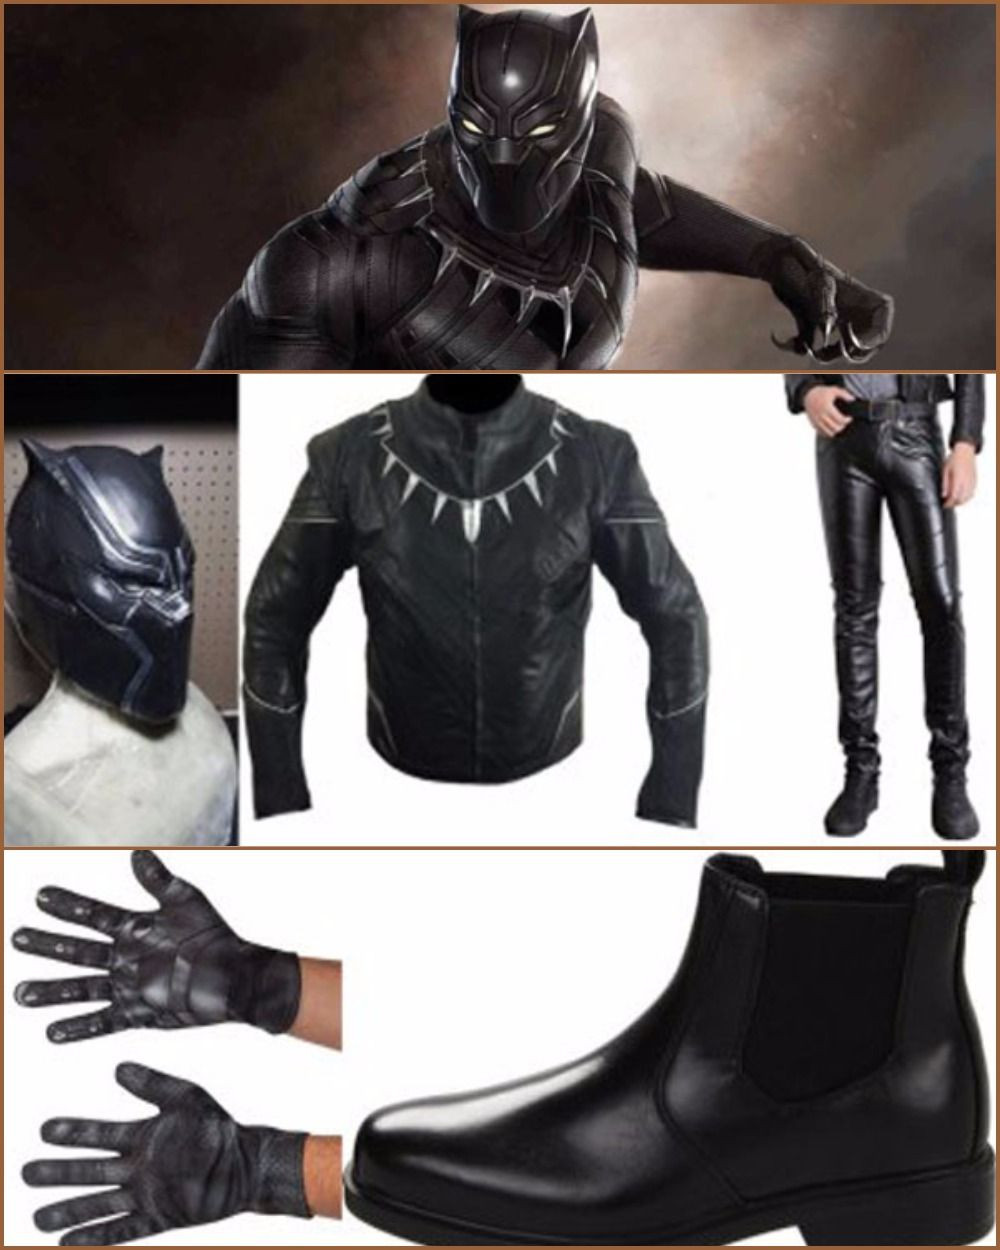 Best ideas about DIY Black Panther Costume
. Save or Pin Black Panther Costume Guide Captain America Civil War Now.